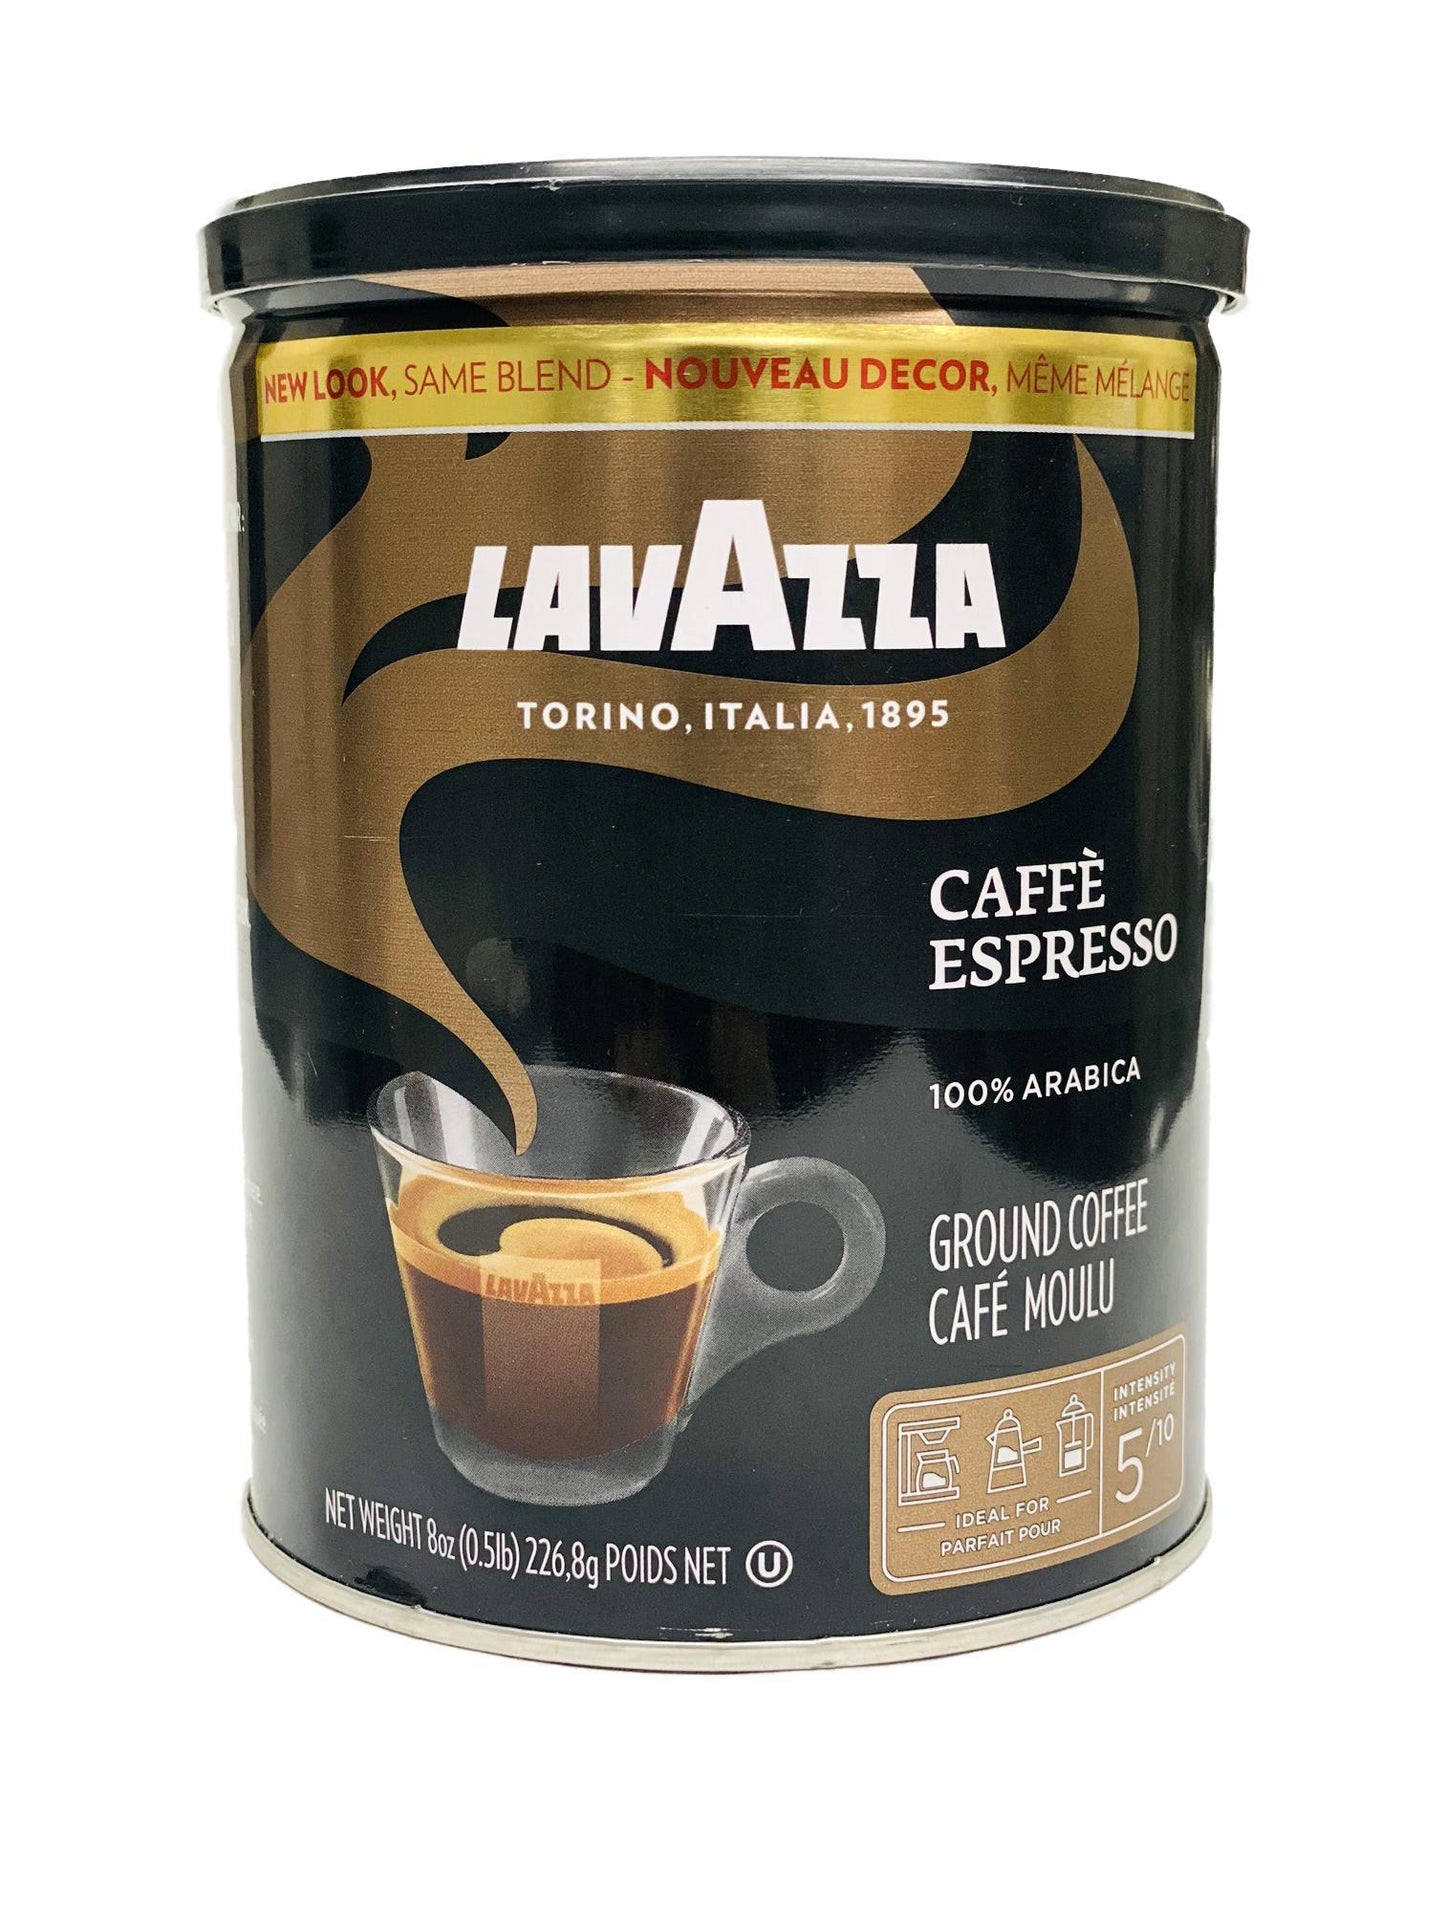 Lavazza FR - L'Espresso Italien Depuis 1895